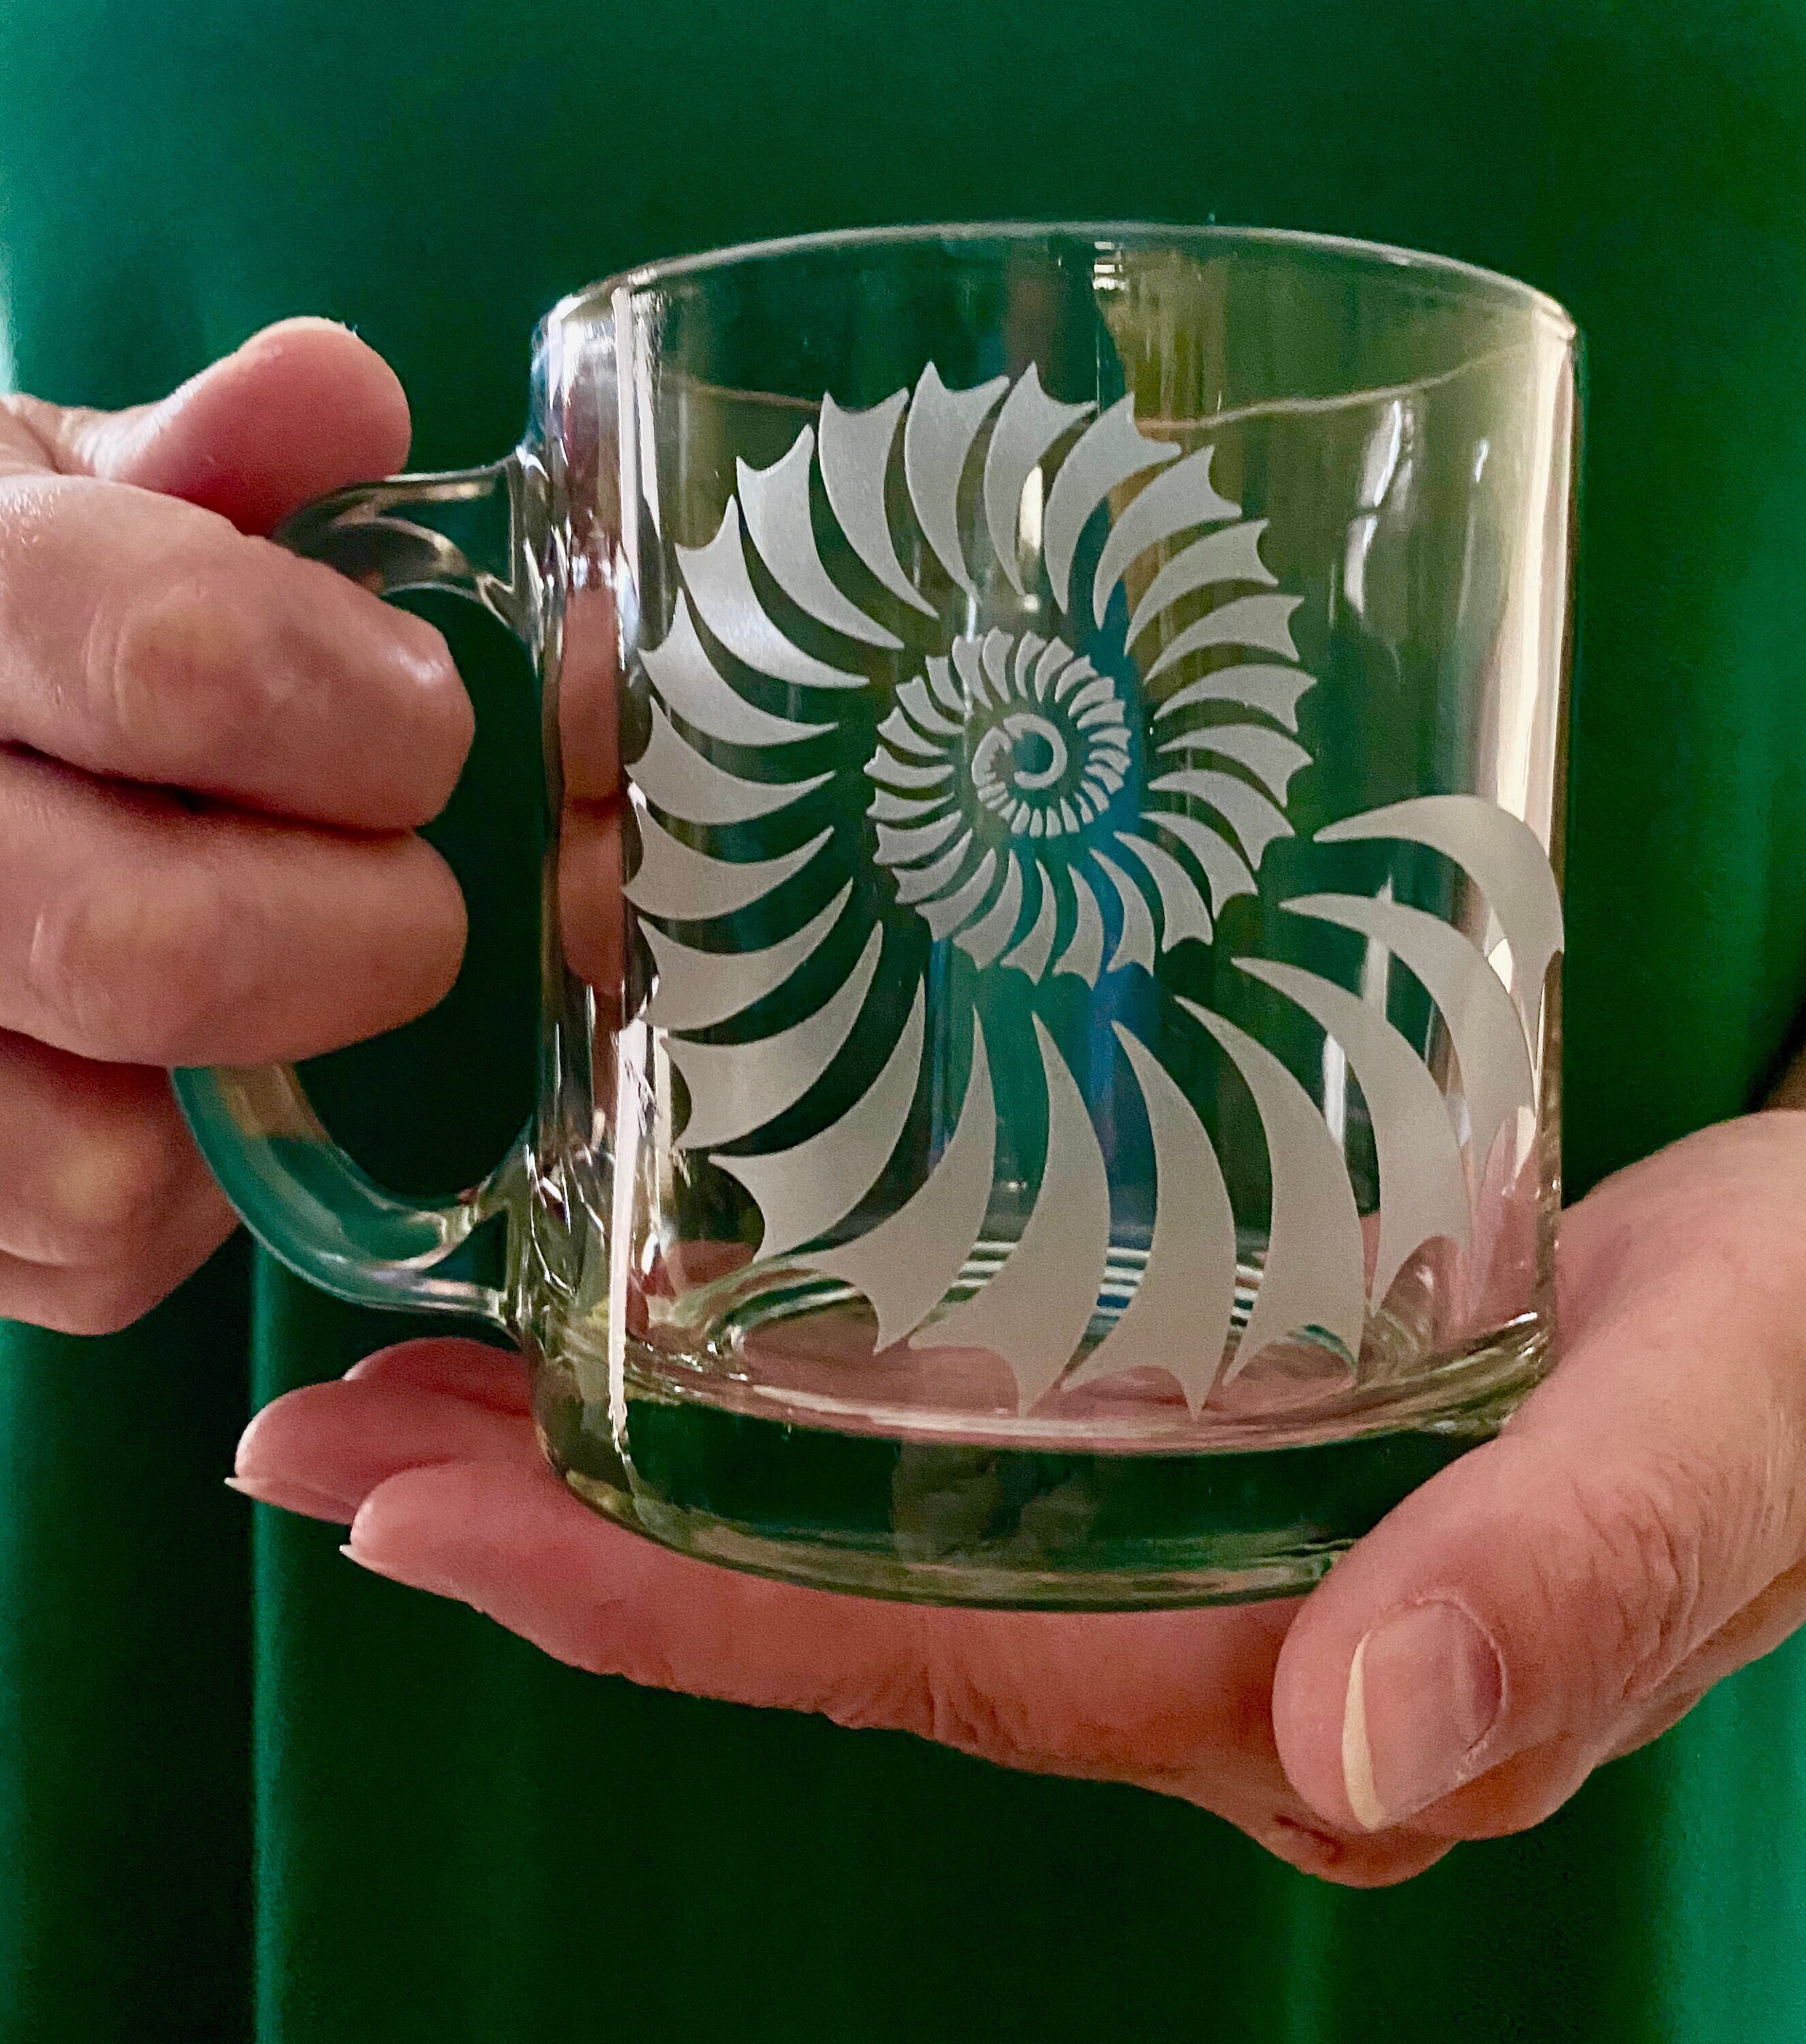 13 oz. Clear Glass Coffee Mug